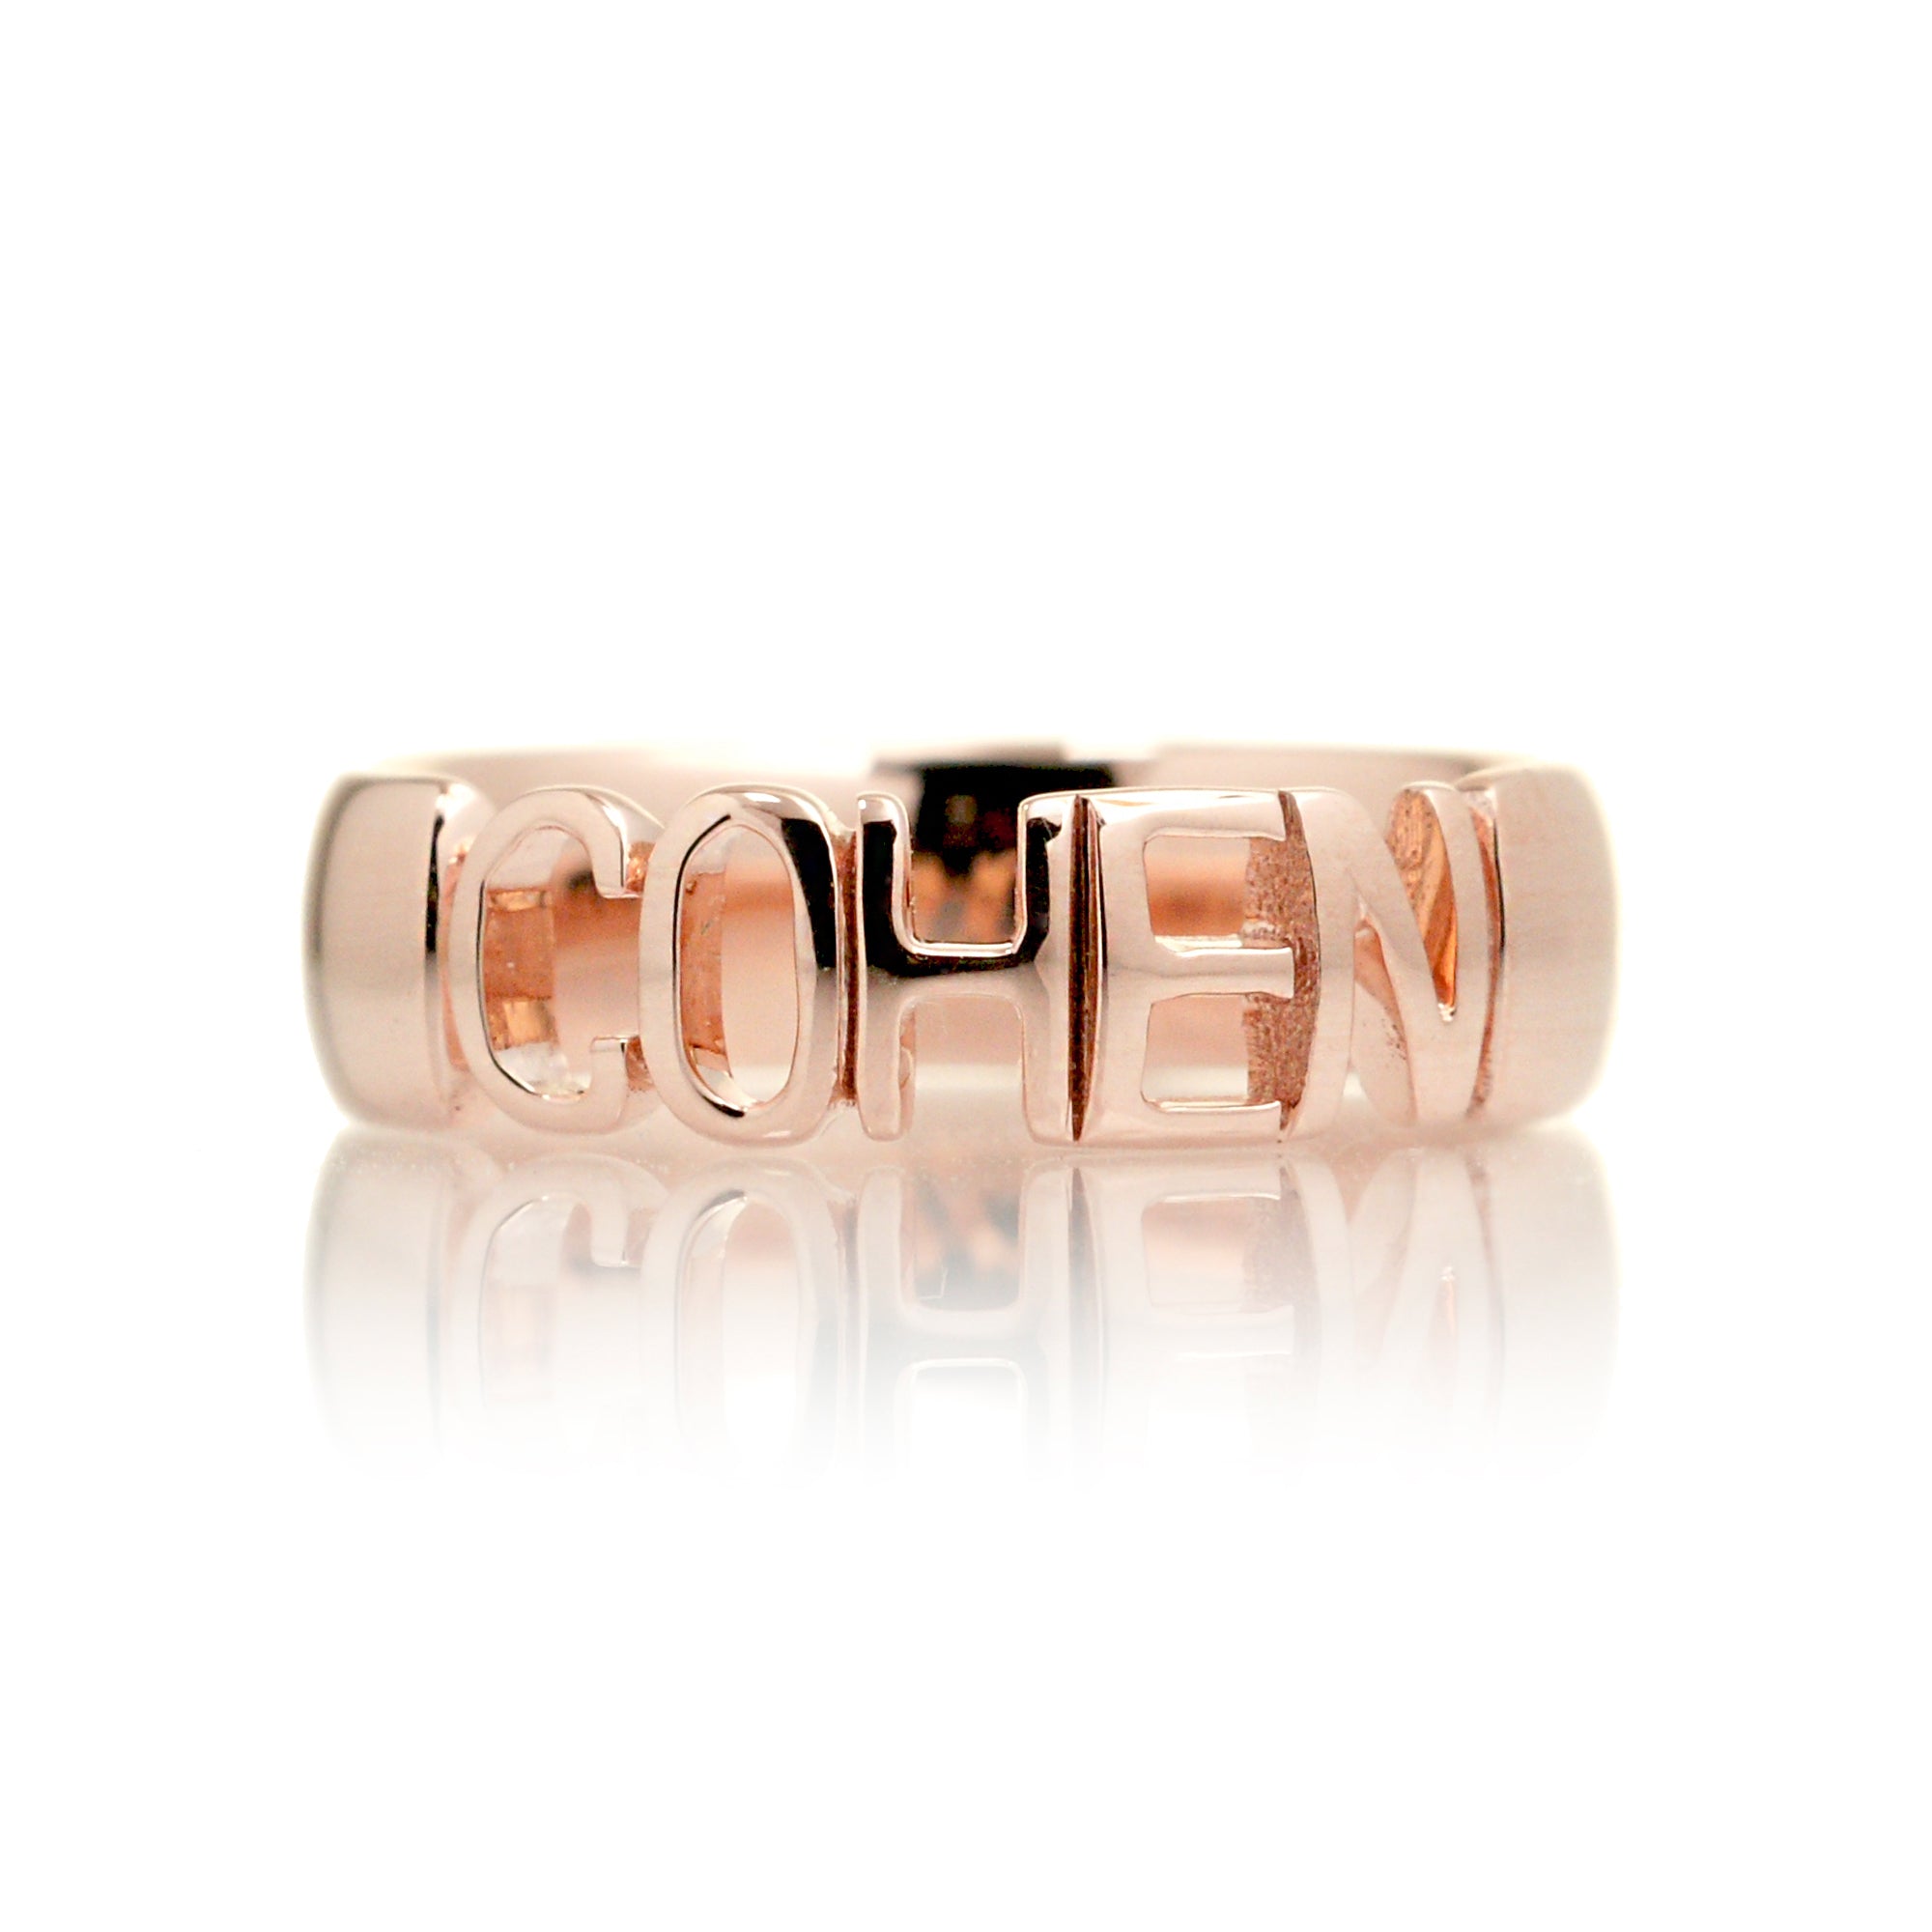 Namesake ring customize name on a band Cohen rose gold